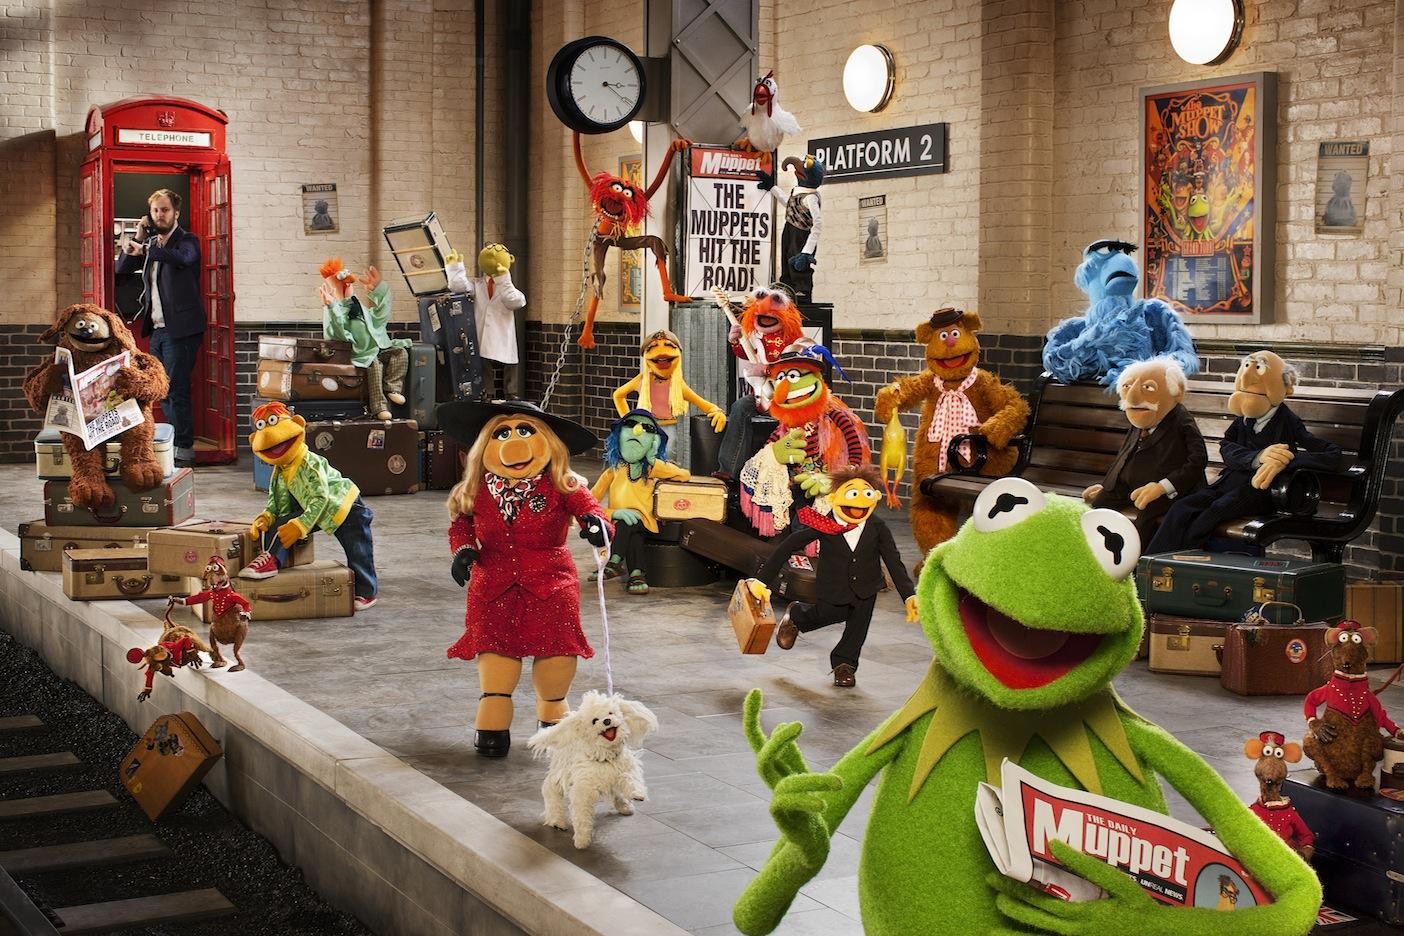 The Muppet Show Bakgrund And Bakgrund Again